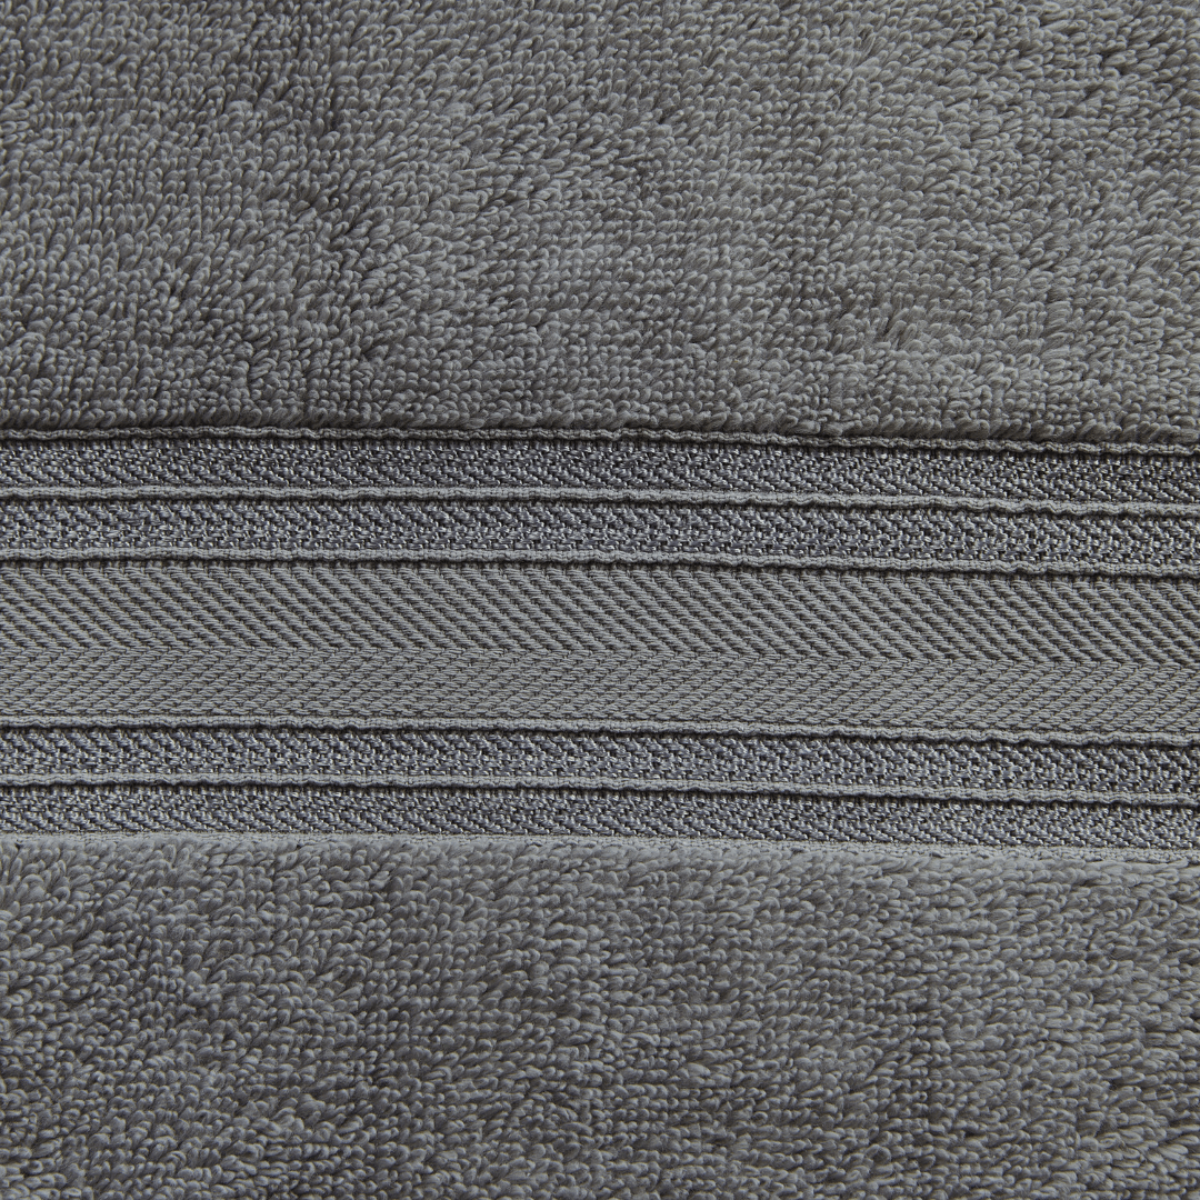 18pc Cotton Bath Towels Set | Spirit Linen - Silver Filigree